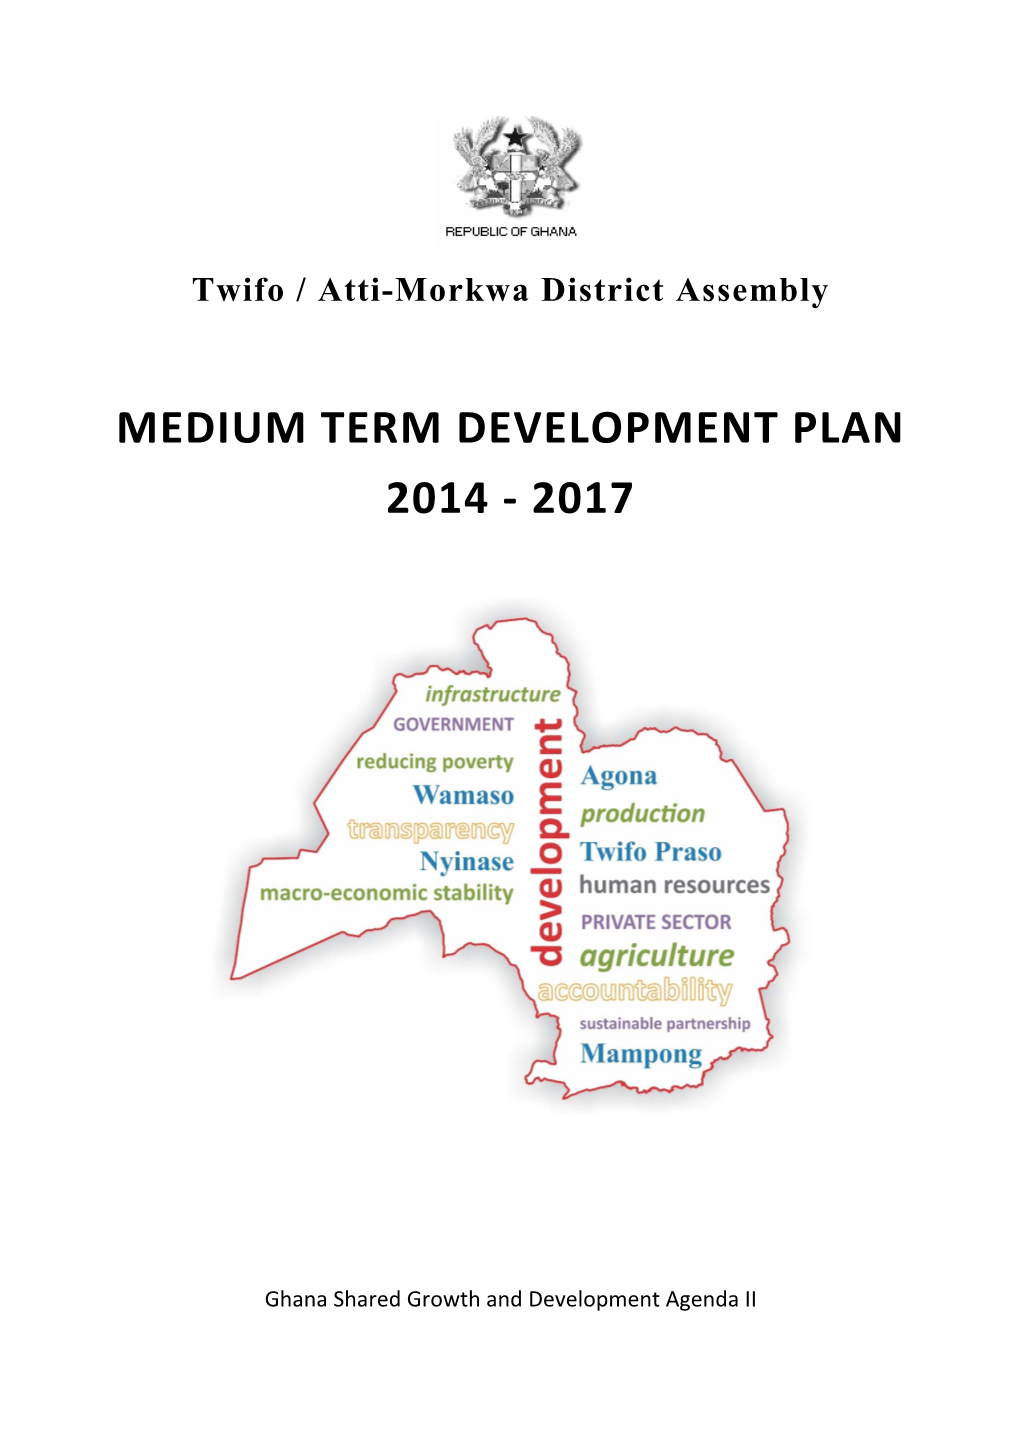 Medium Term Development Plan 2014-2017